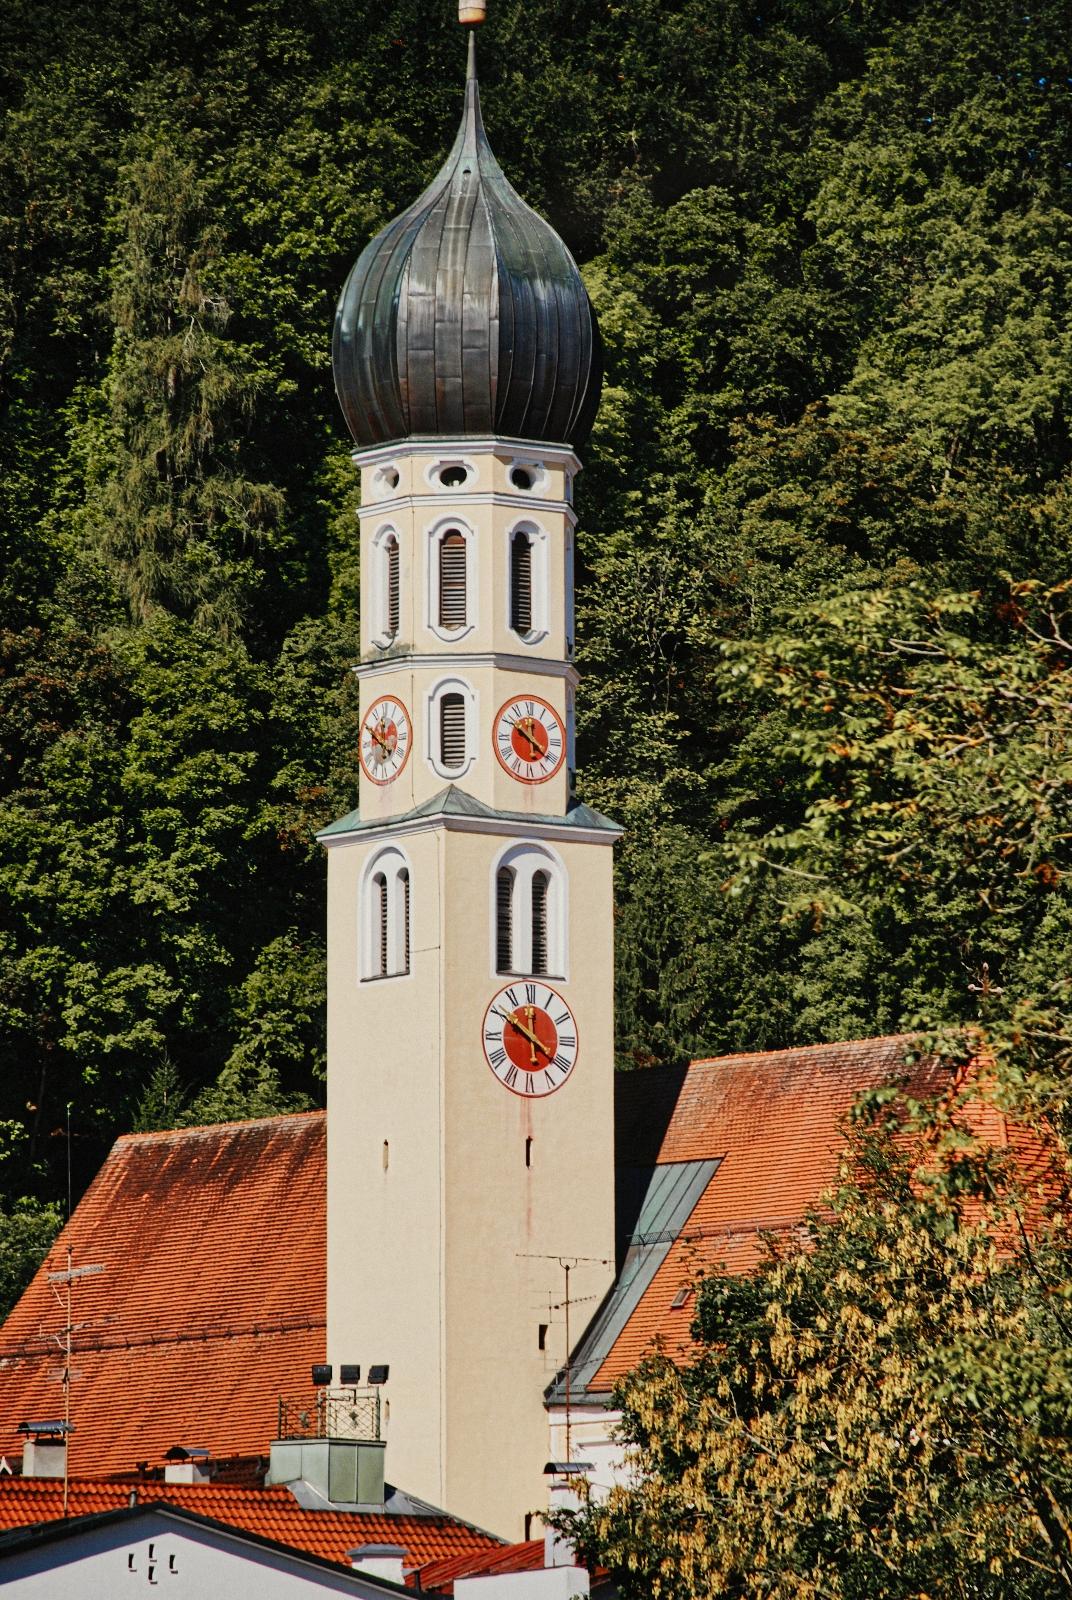 St. Andreas Turm mit Zwiebelkuppel